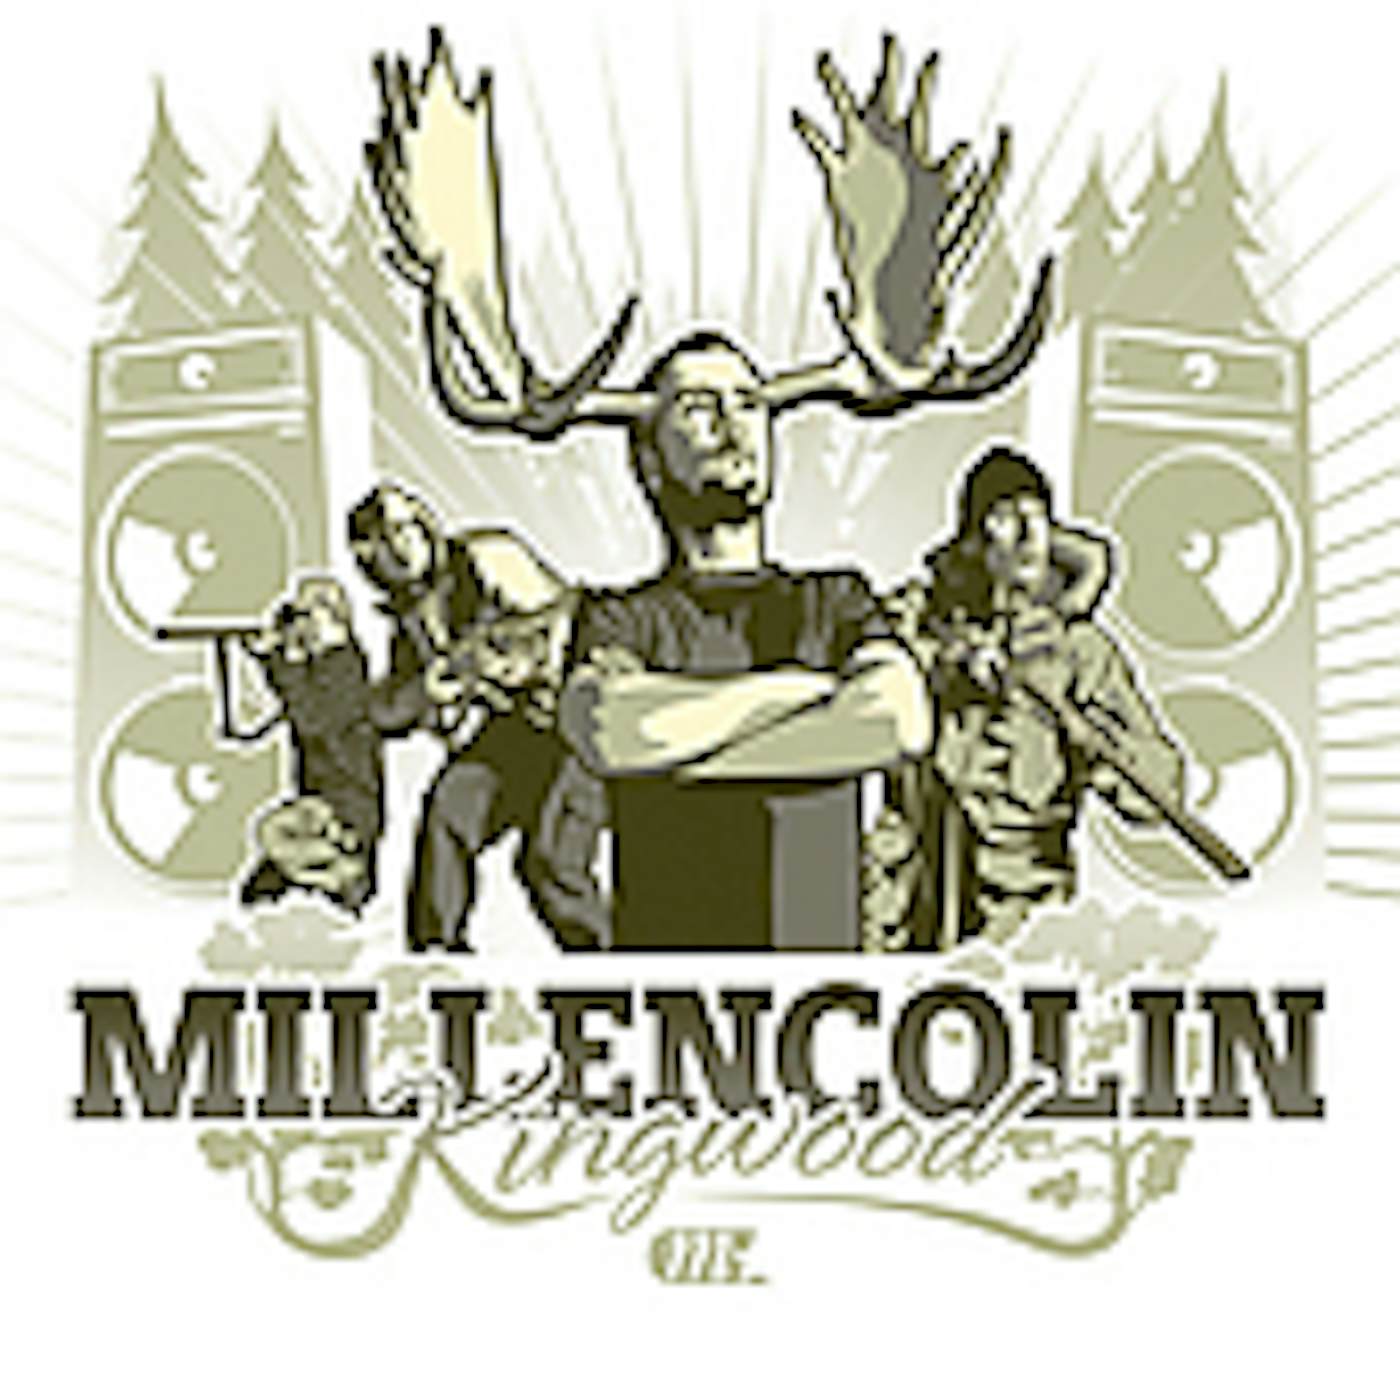 Millencolin KINGWOOD CD